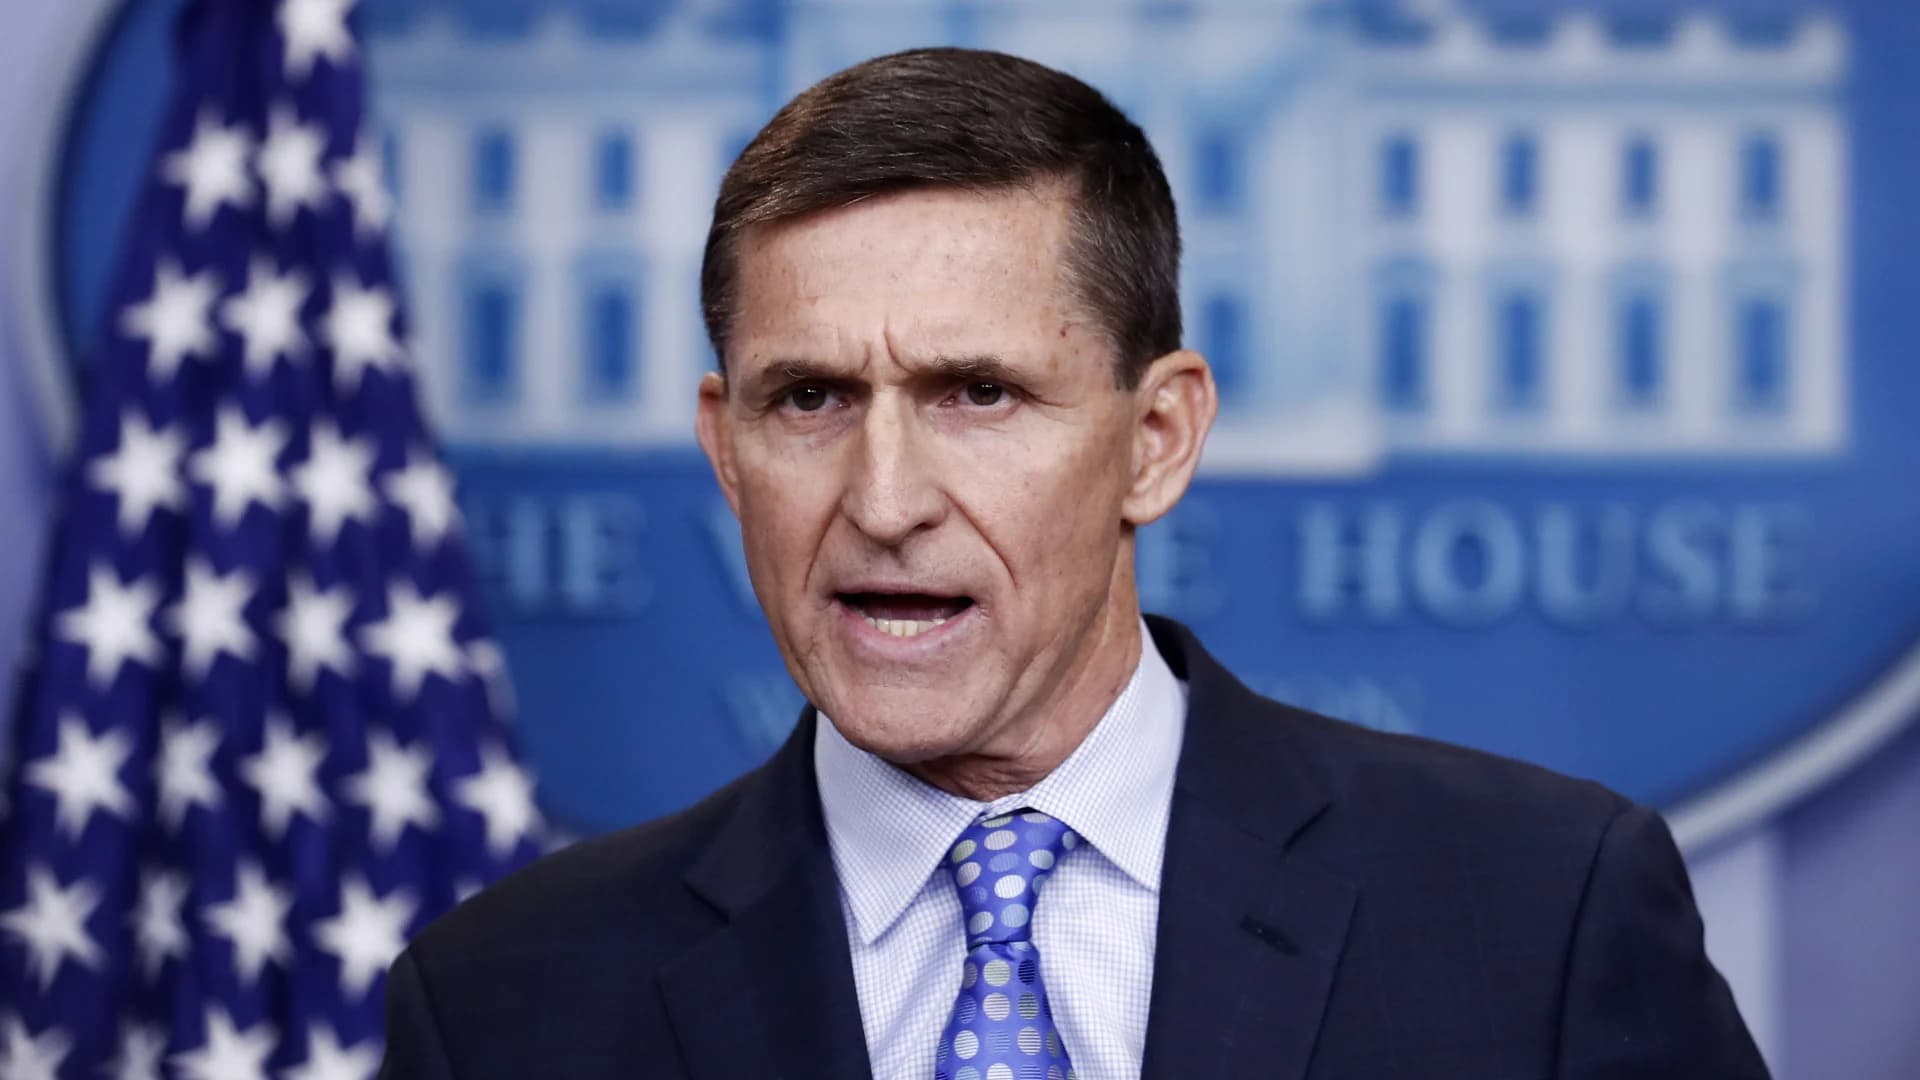 President Trump pardons Michael Flynn, taking direct aim at Russia probe